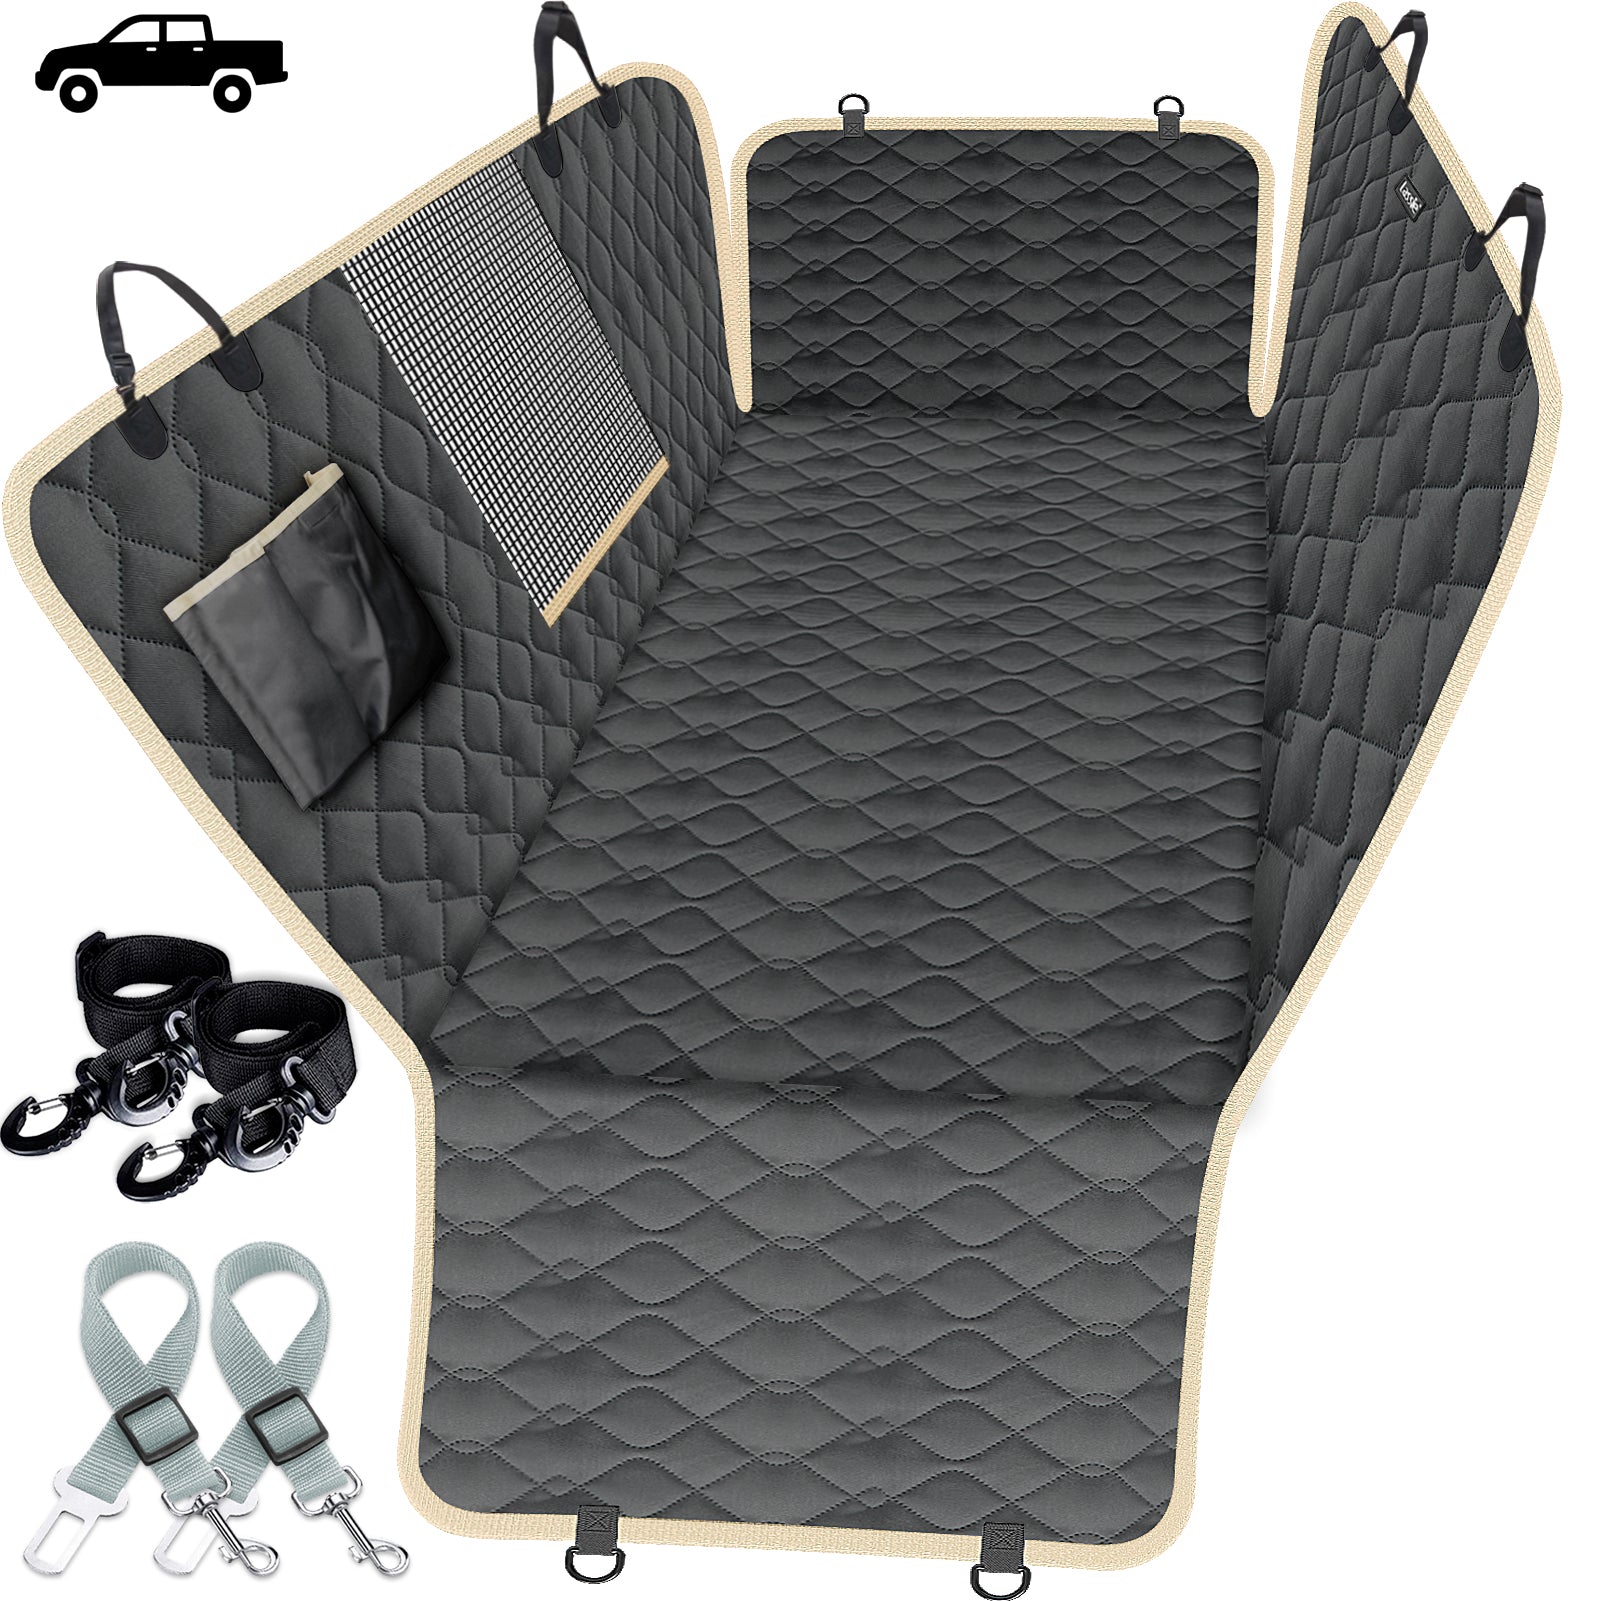 PETnSport Dog Car Seat Cover - Hammock Style Waterproof Cargo & Back S